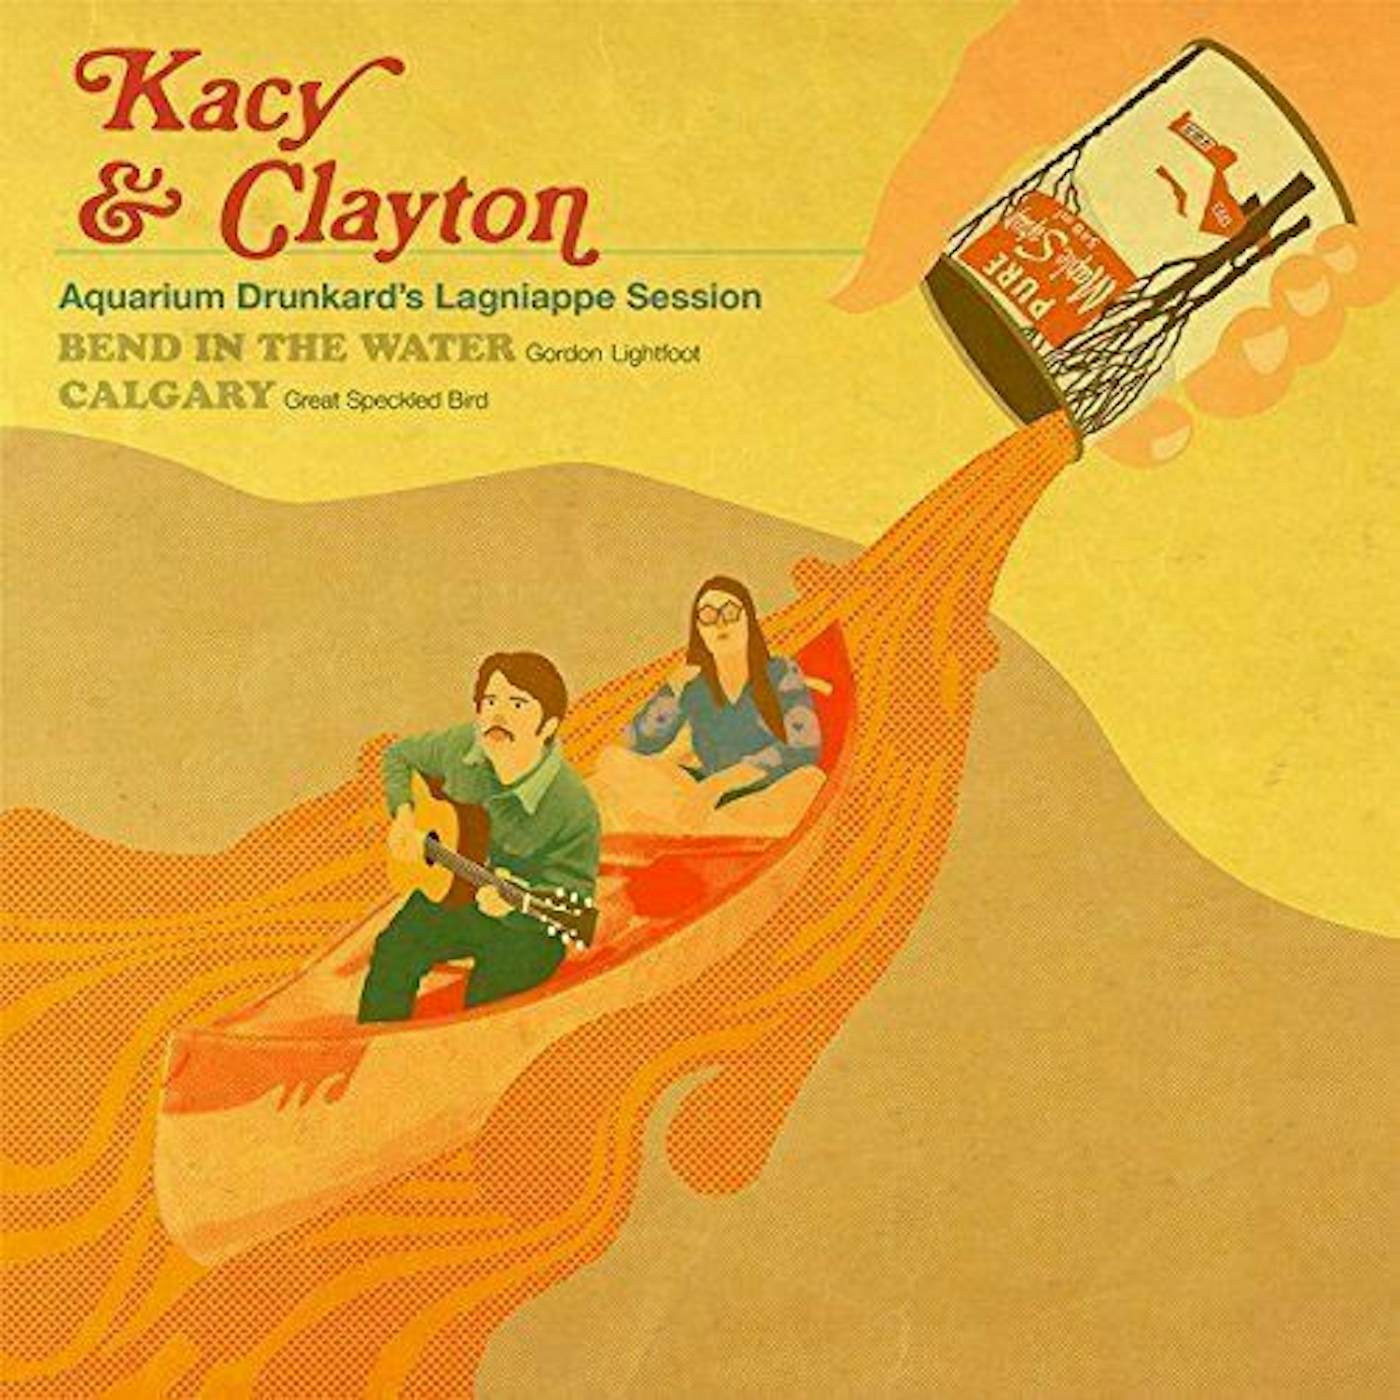 Kacy & Clayton AQUARIUM DRUNKARD'S LAGNIAPPE SESSION Vinyl Record